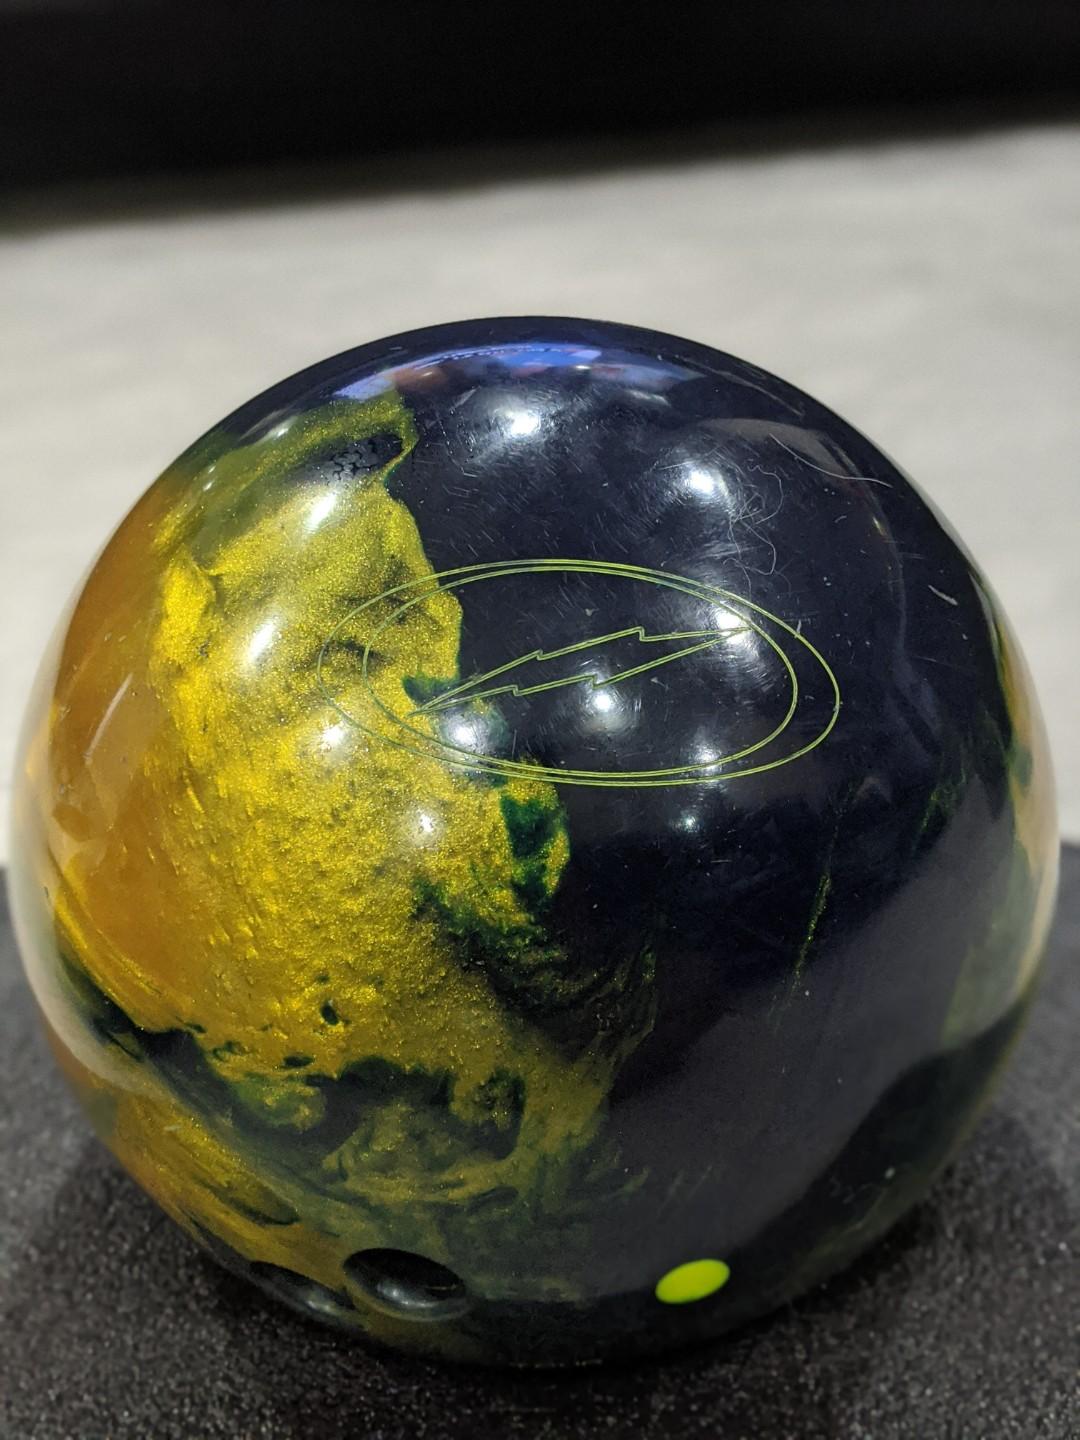 iq tour fusion bowling ball